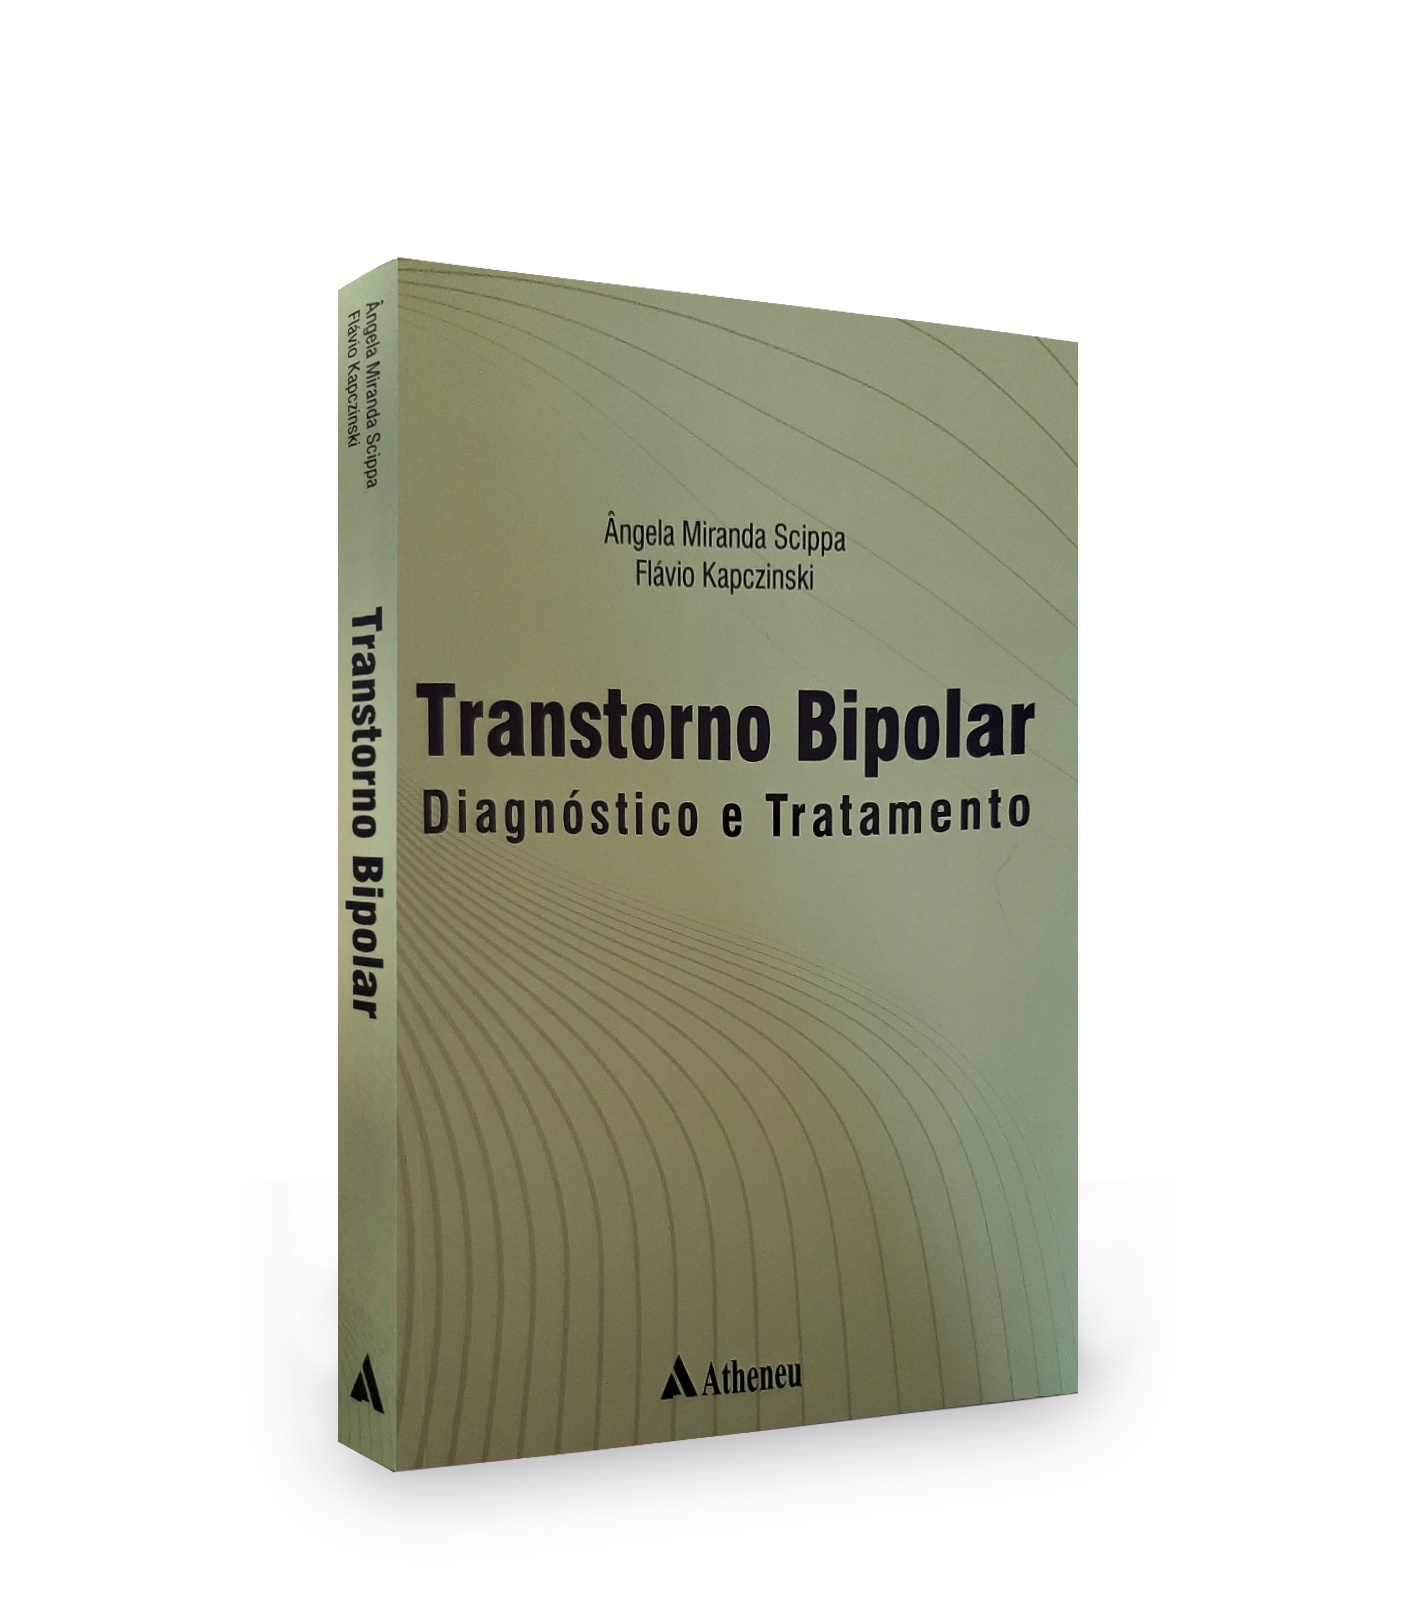 Transtorno Bipolar - Diagnóstico E Tratamento